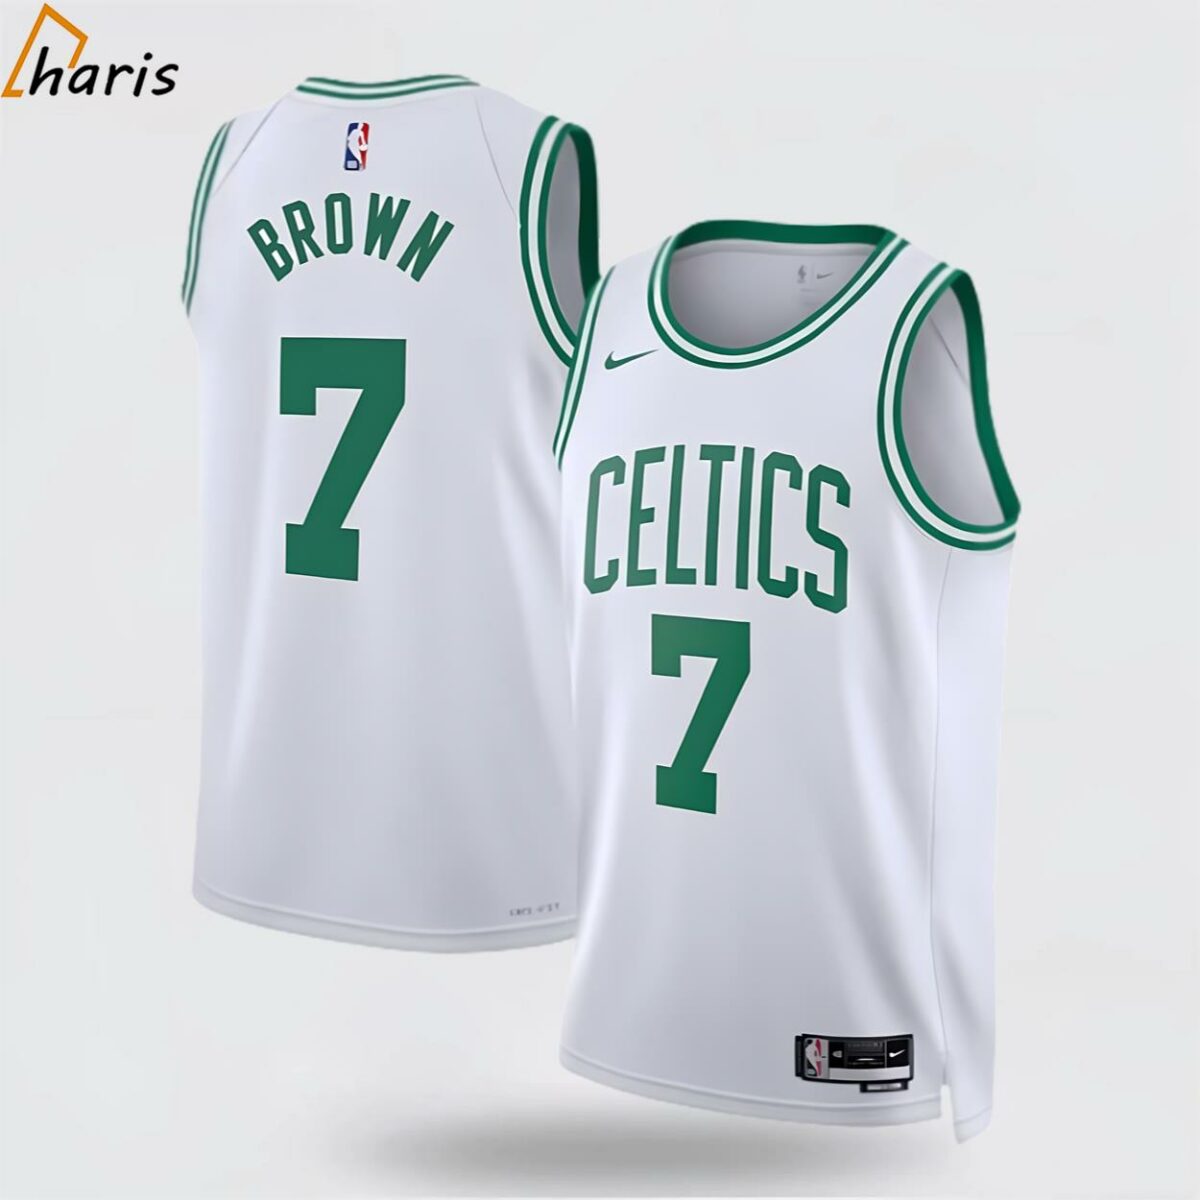 Boston Celtics Nike Association Edition Swingman Jaylen Brown White Jersey 1 jersey